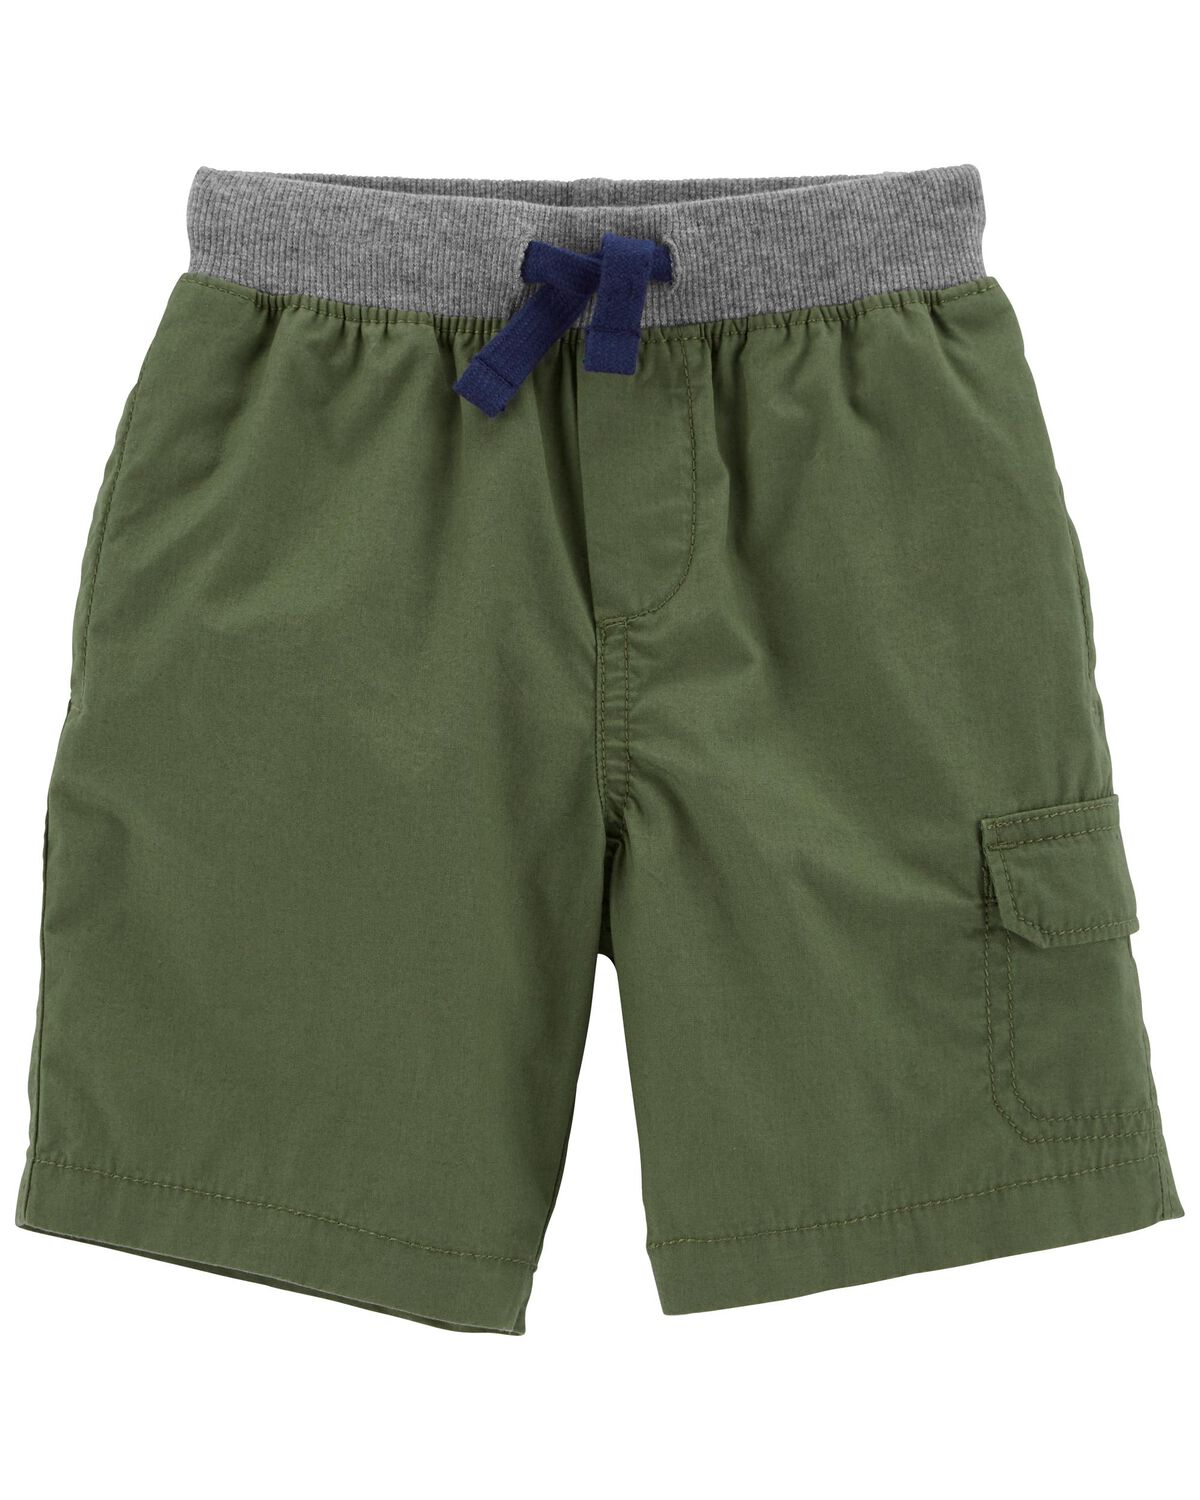 Green Toddler Cargo Shorts | carters.com